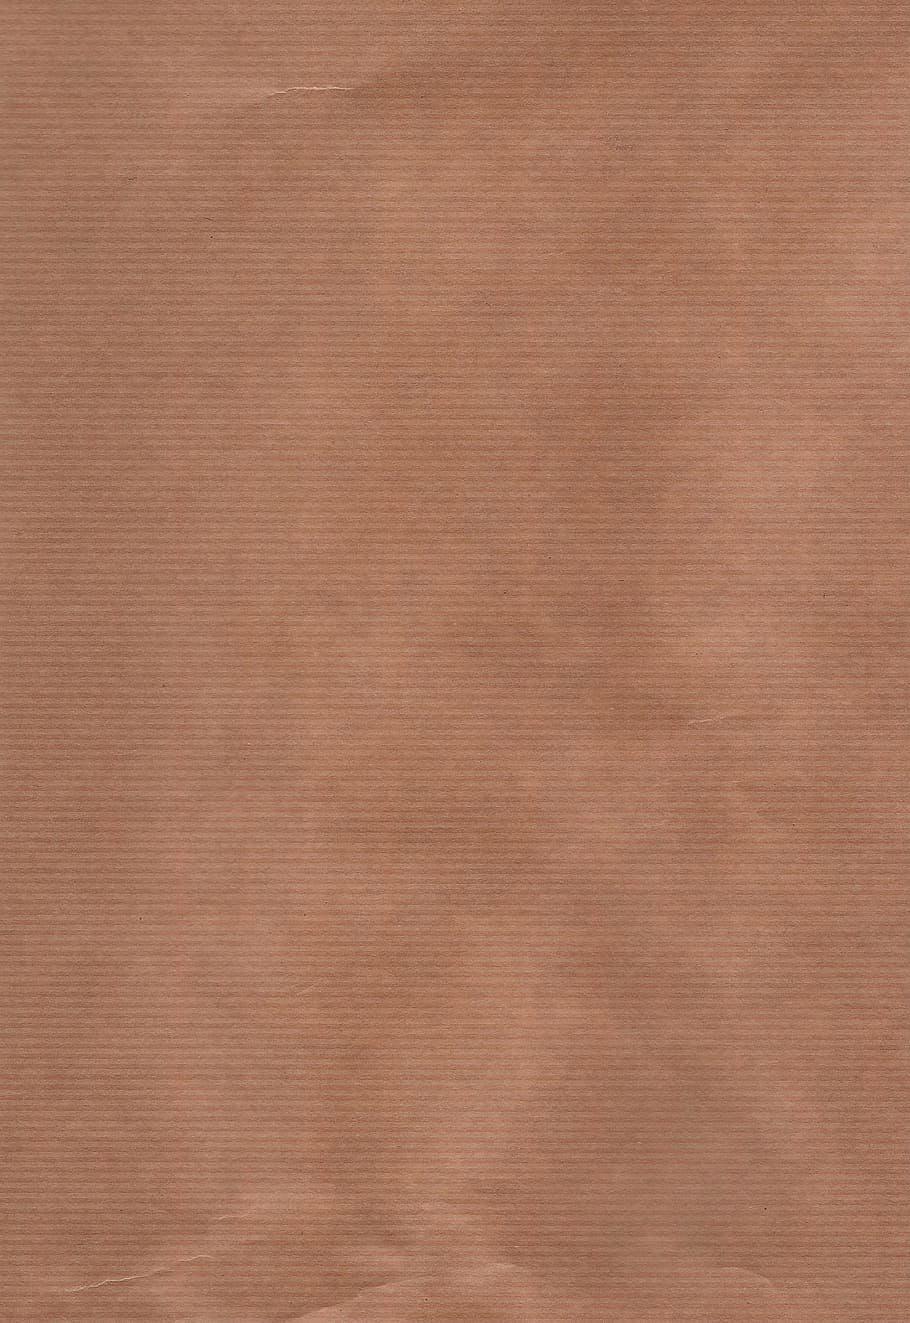 Brown paper textured and background, Dark craft paper background